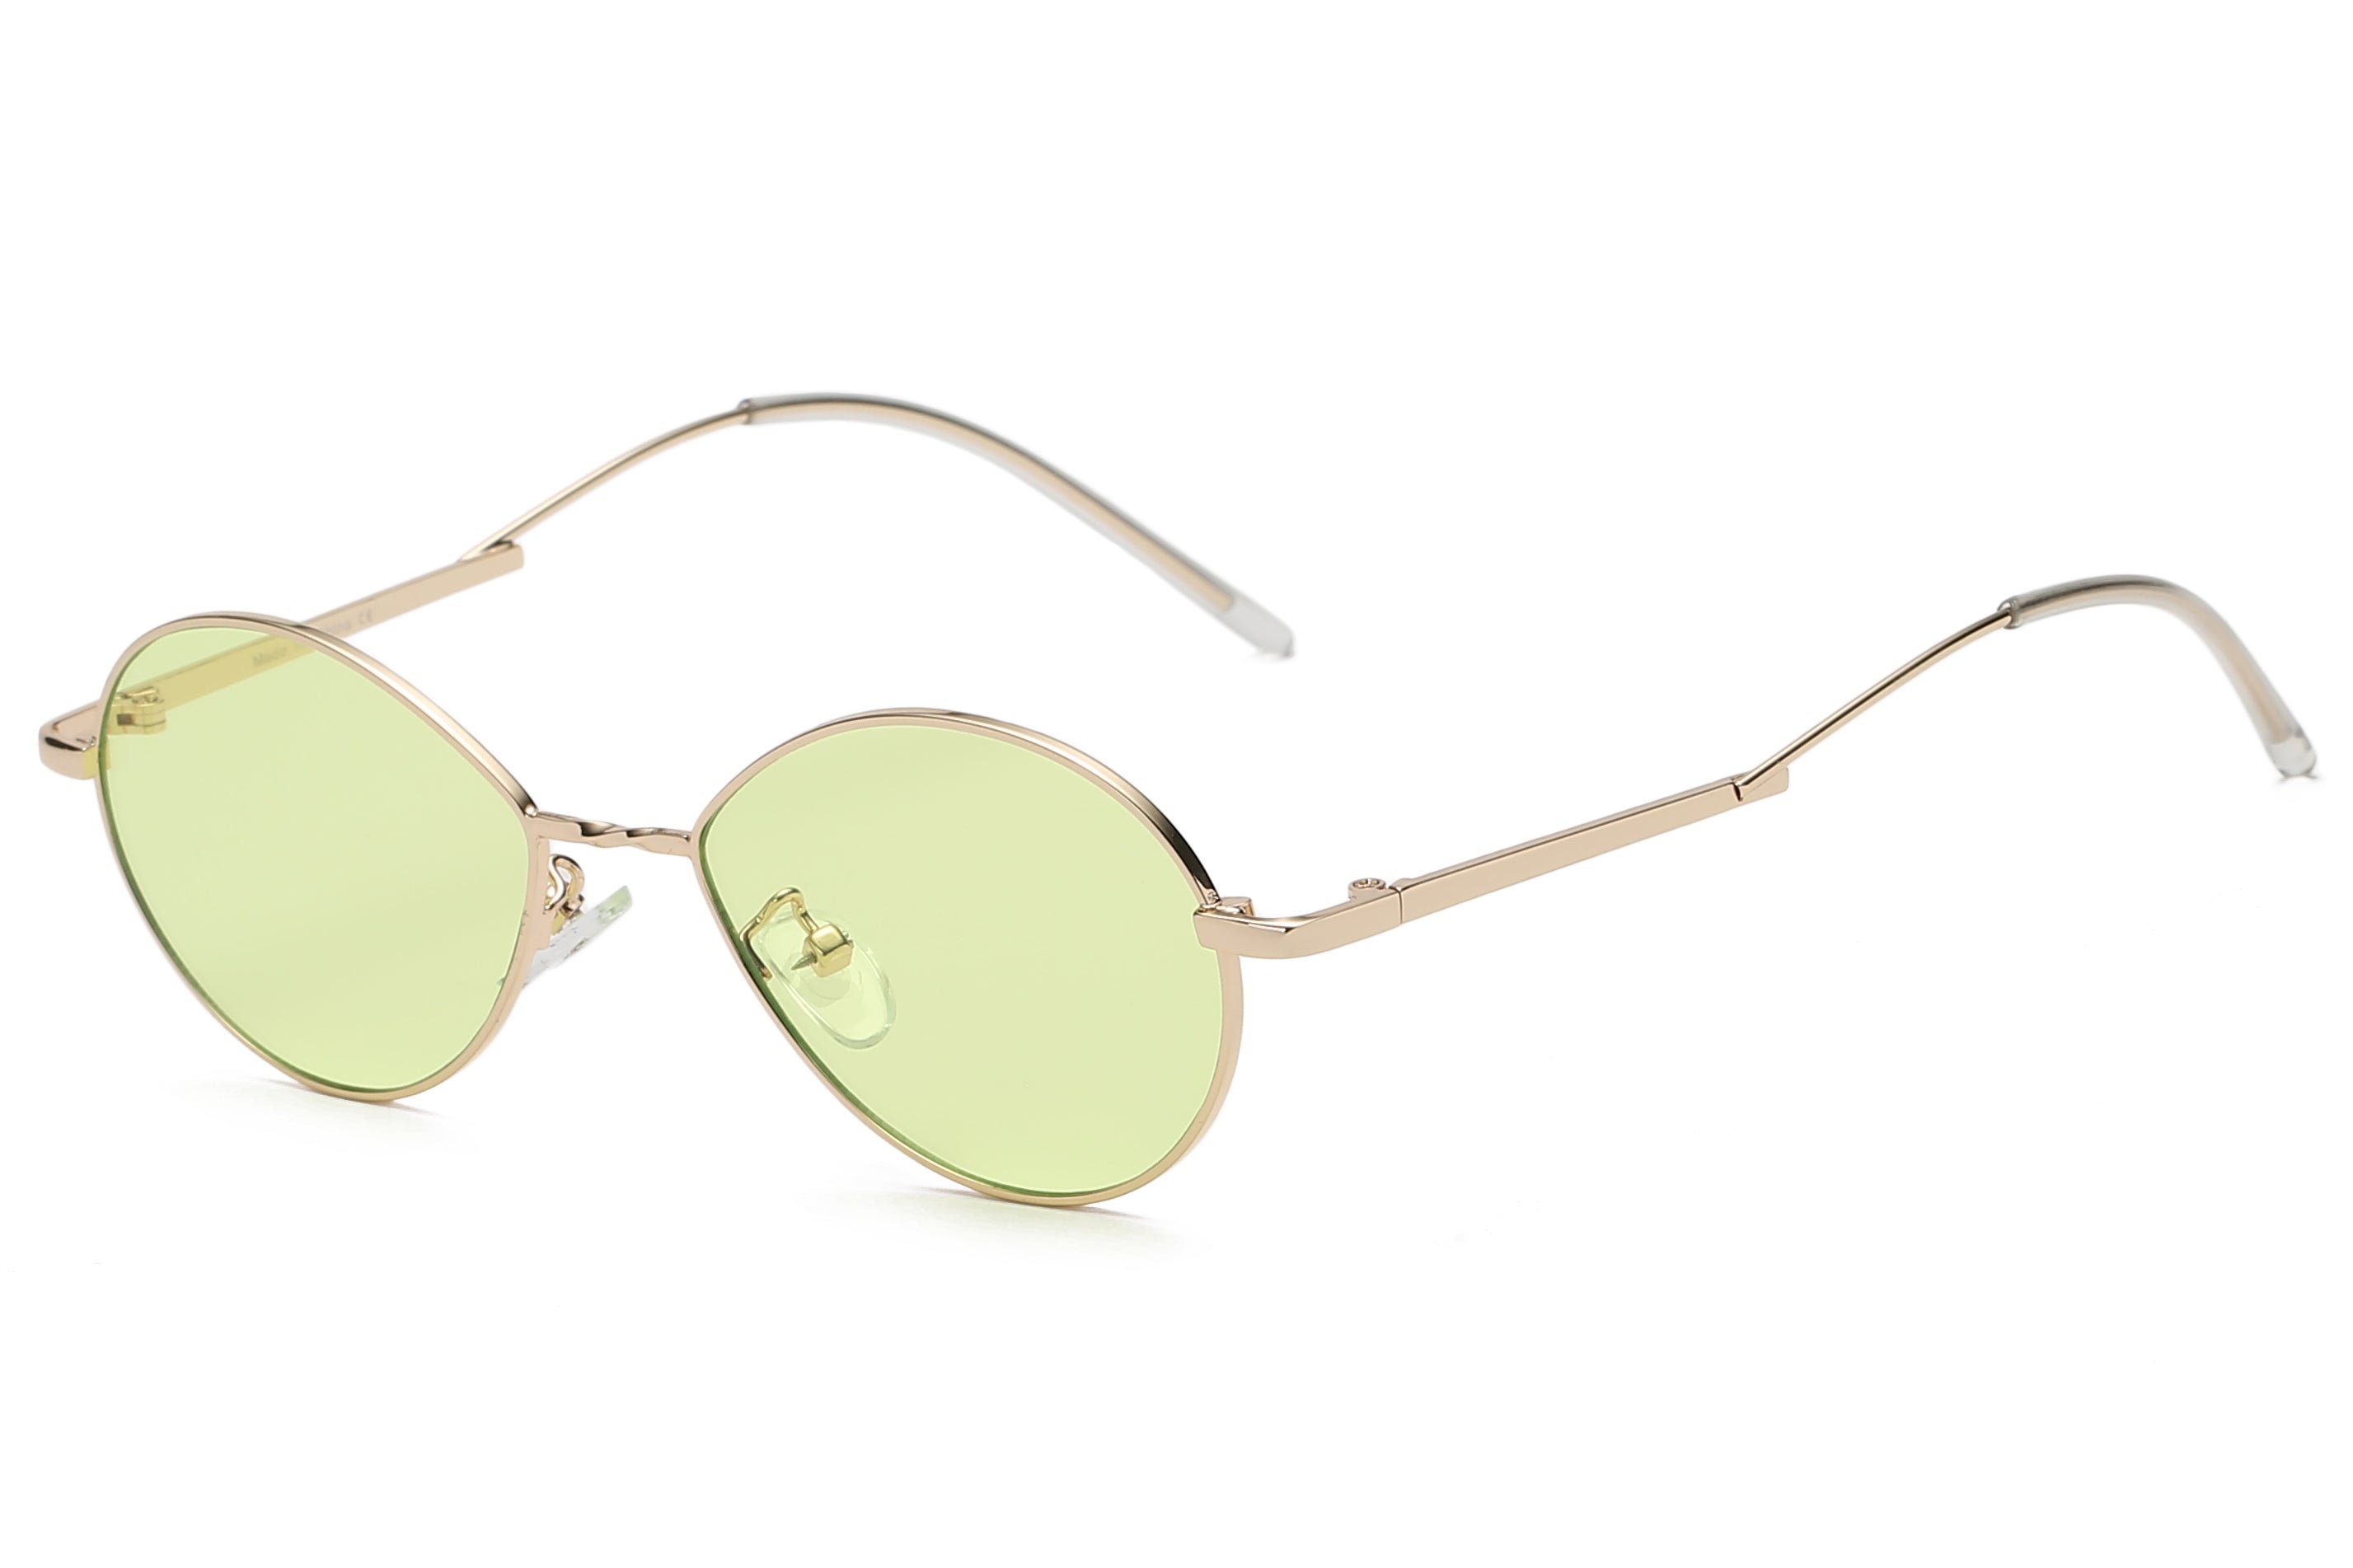 S3009 - Small Retro VINTAGE Metal Round Sunglasses Light Green